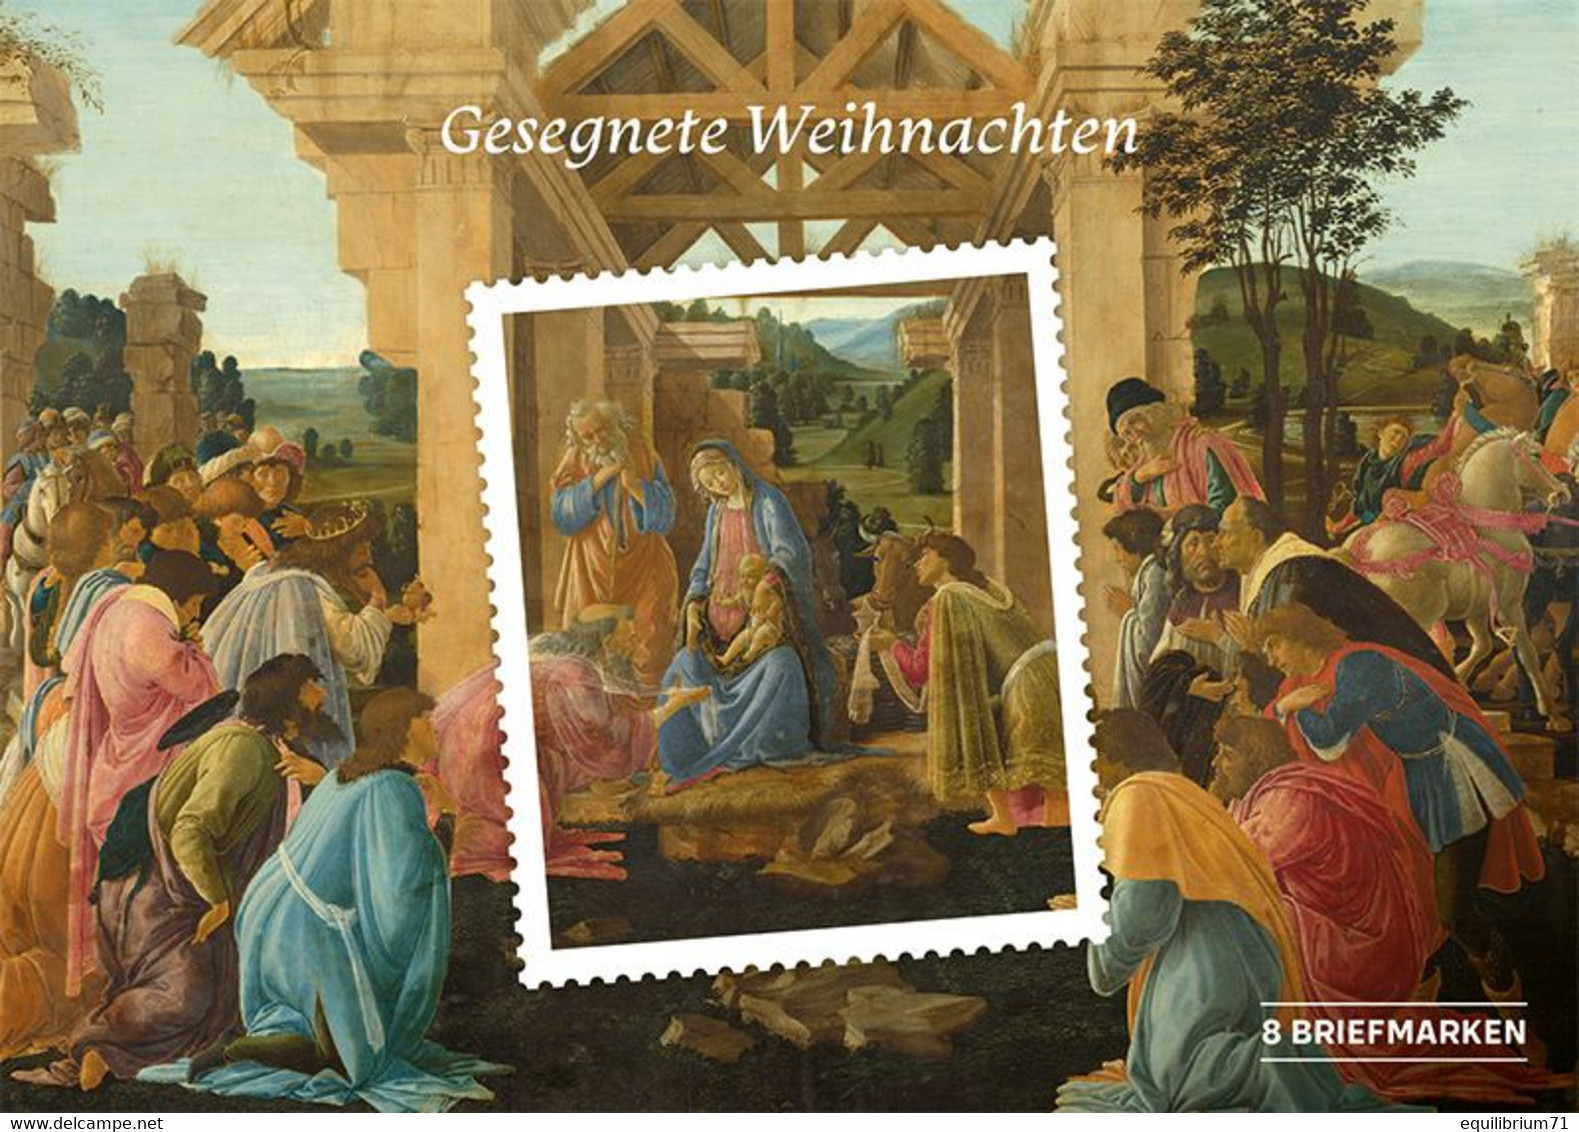 Autriche** - Timbres De Noël / Kerst Postzegels / Weihnachtsmarken / Christmas Stamps - Quadri